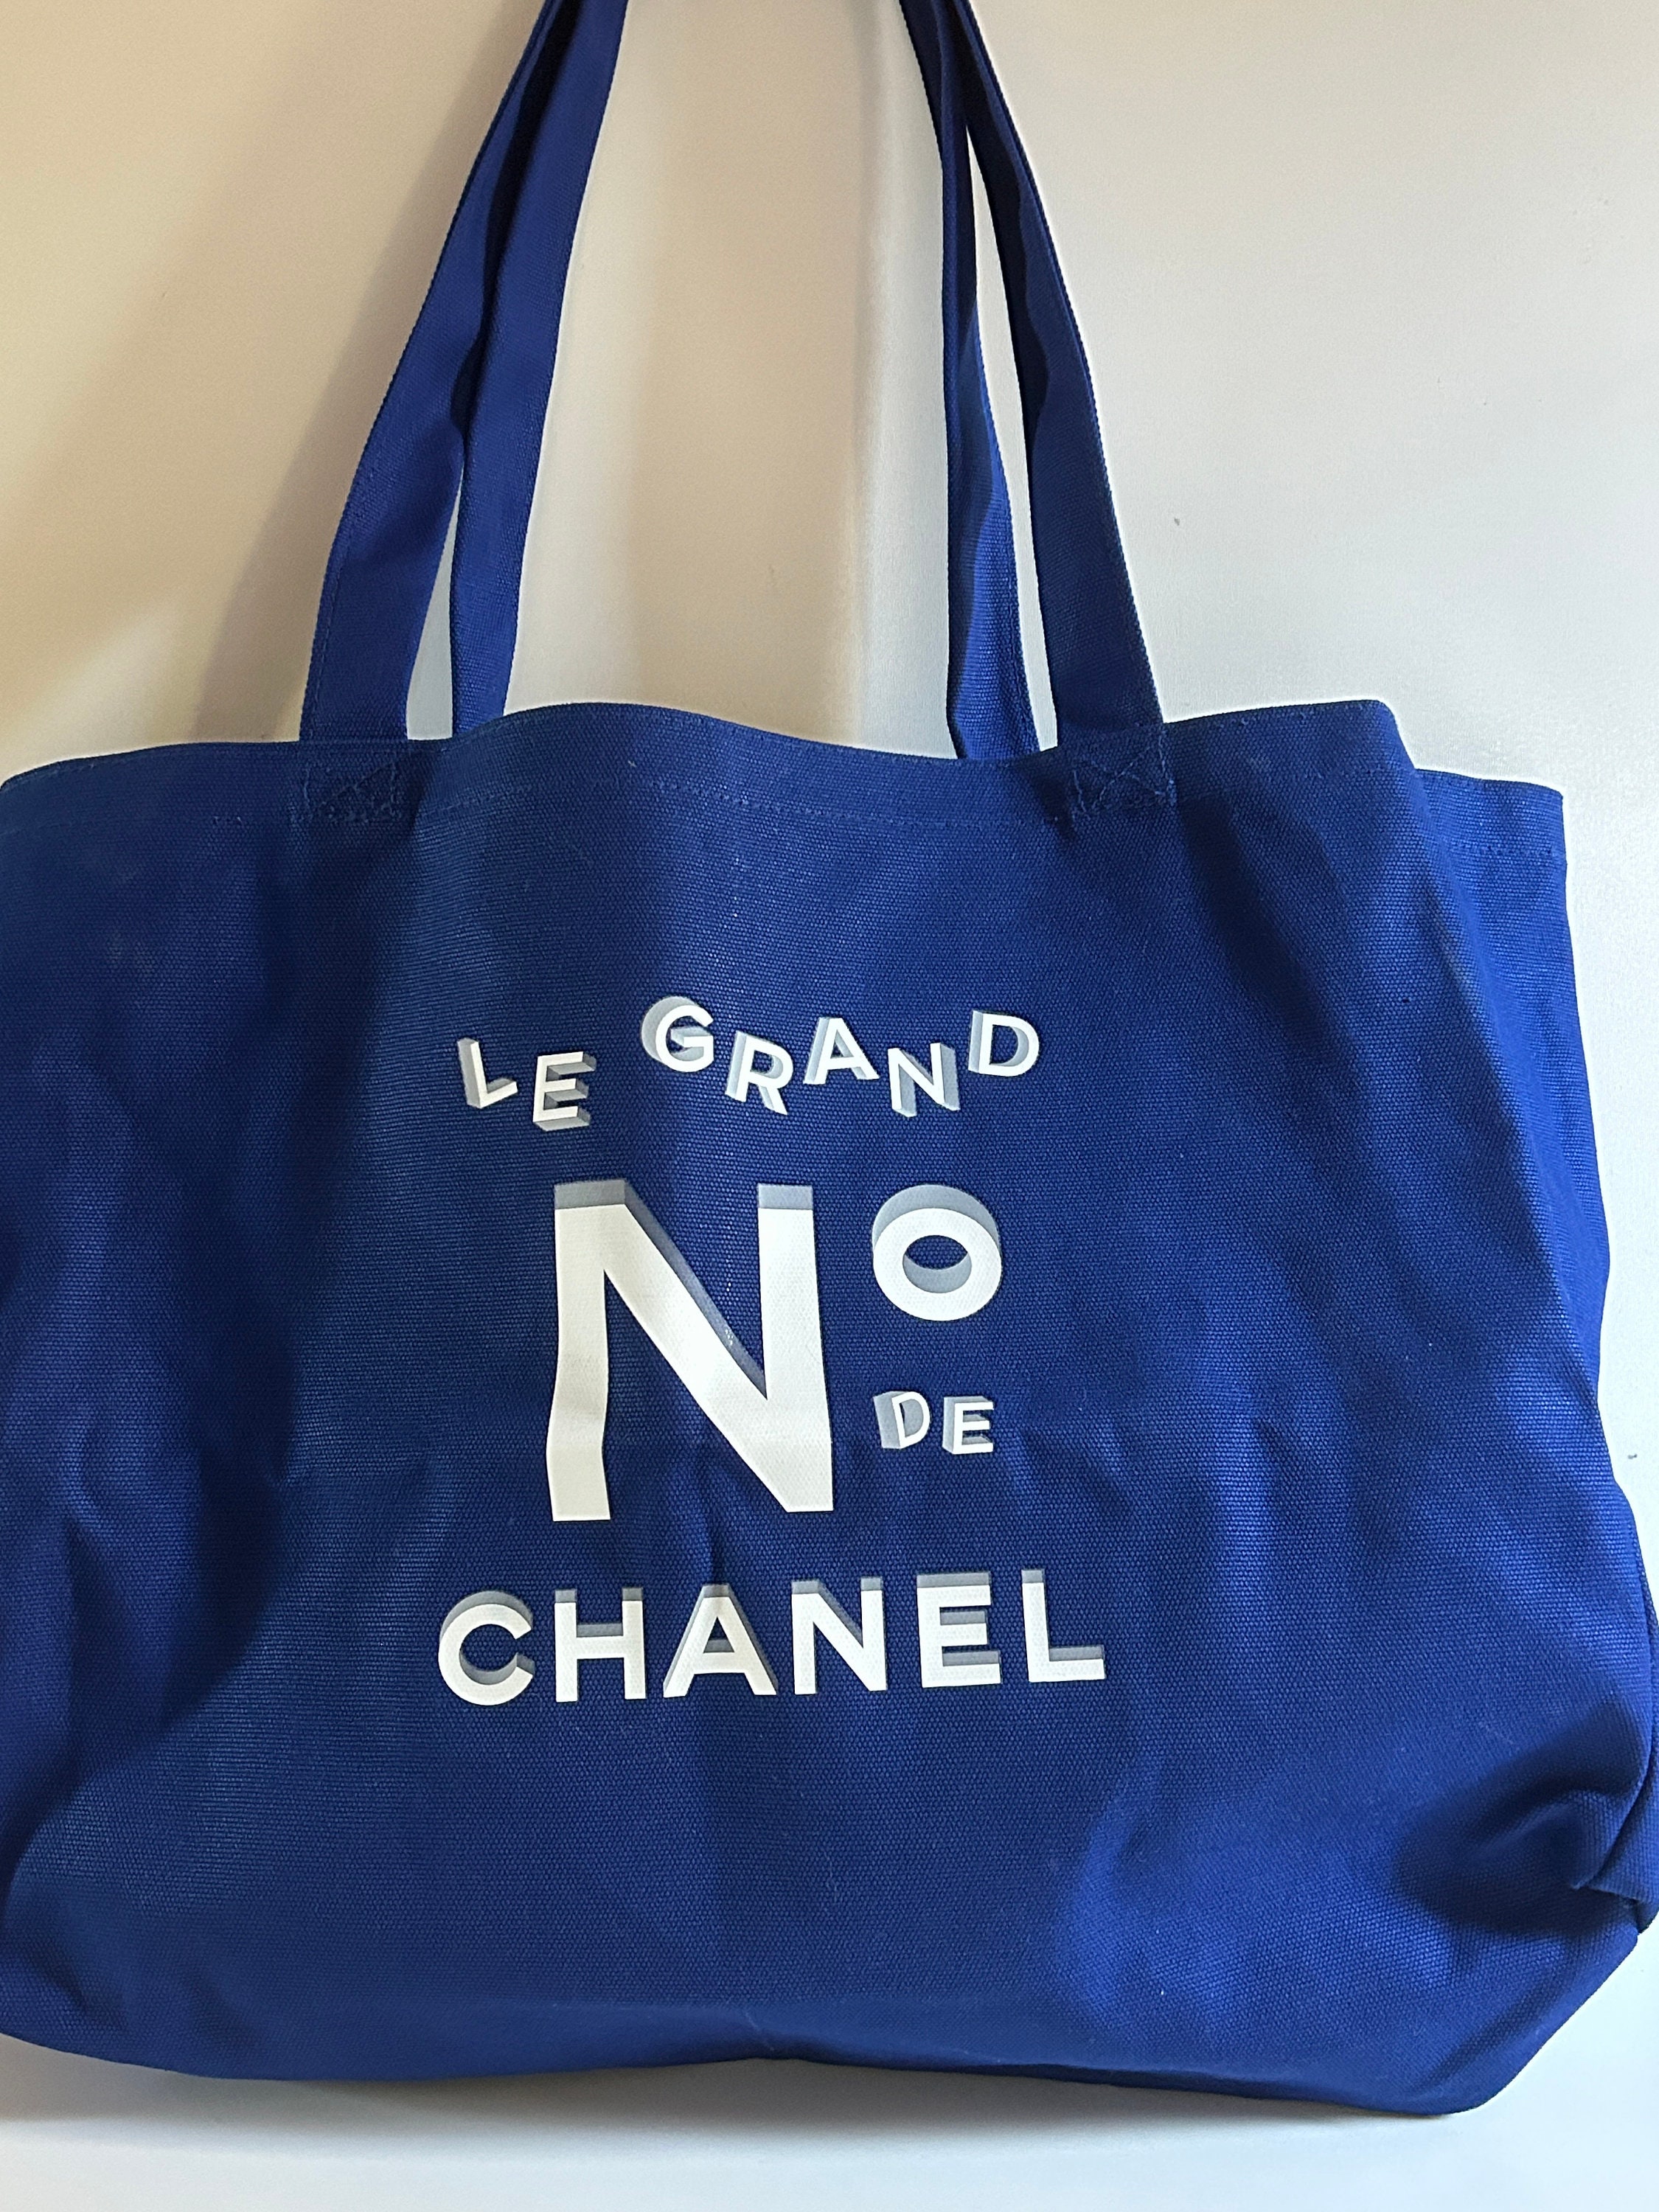 CHANEL VIP GIFT Mesh Shopping Tote Bag Handbag Black $54.00 - PicClick